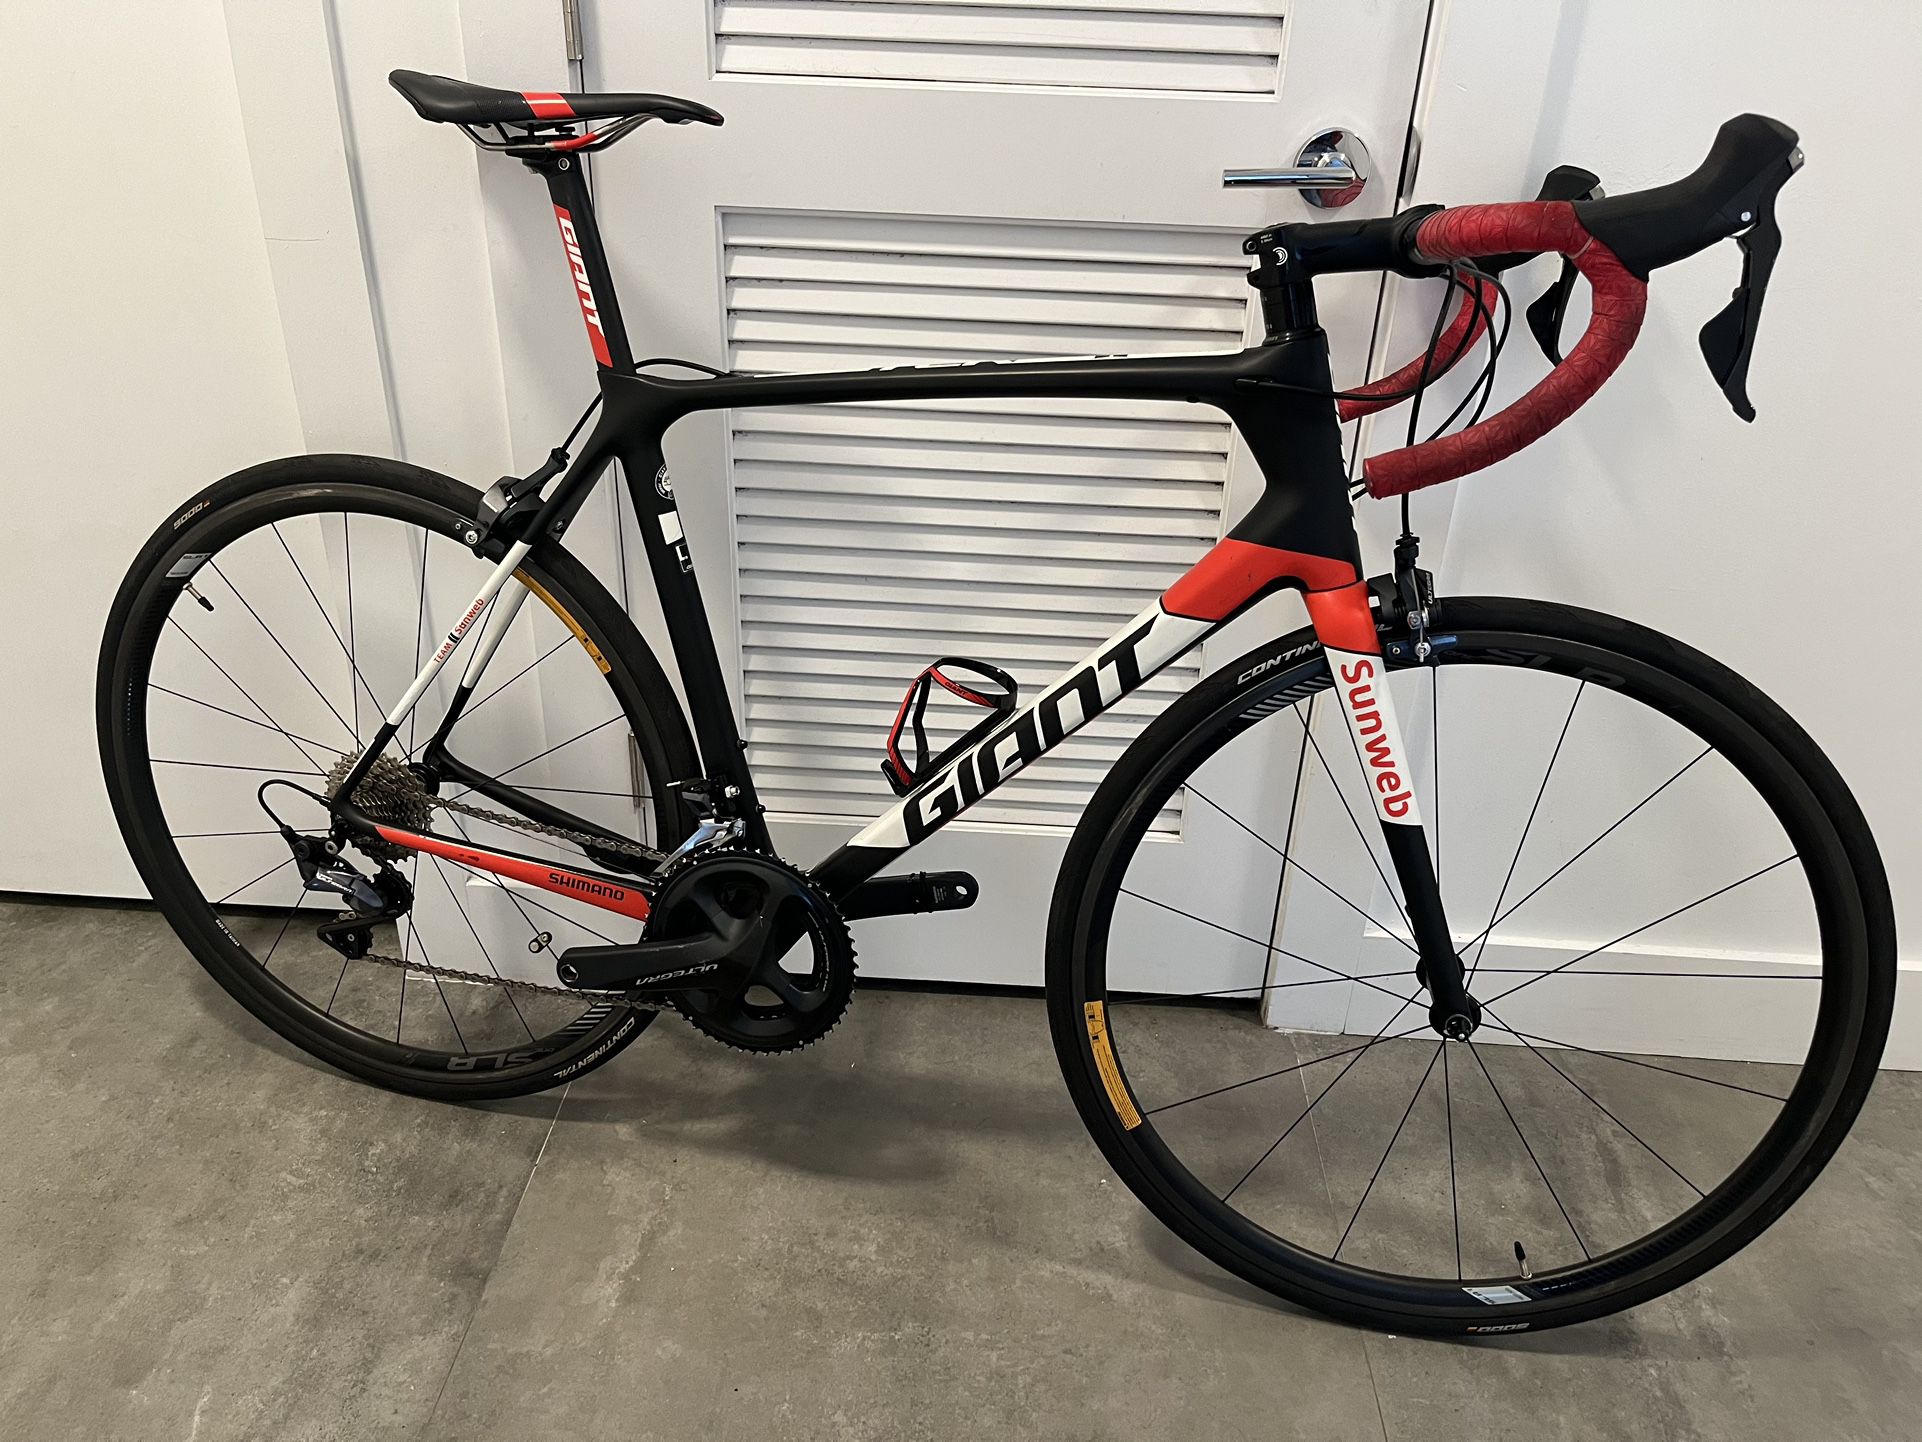 2018 giant tcr advanced pro team sun web road bike 56cm Large